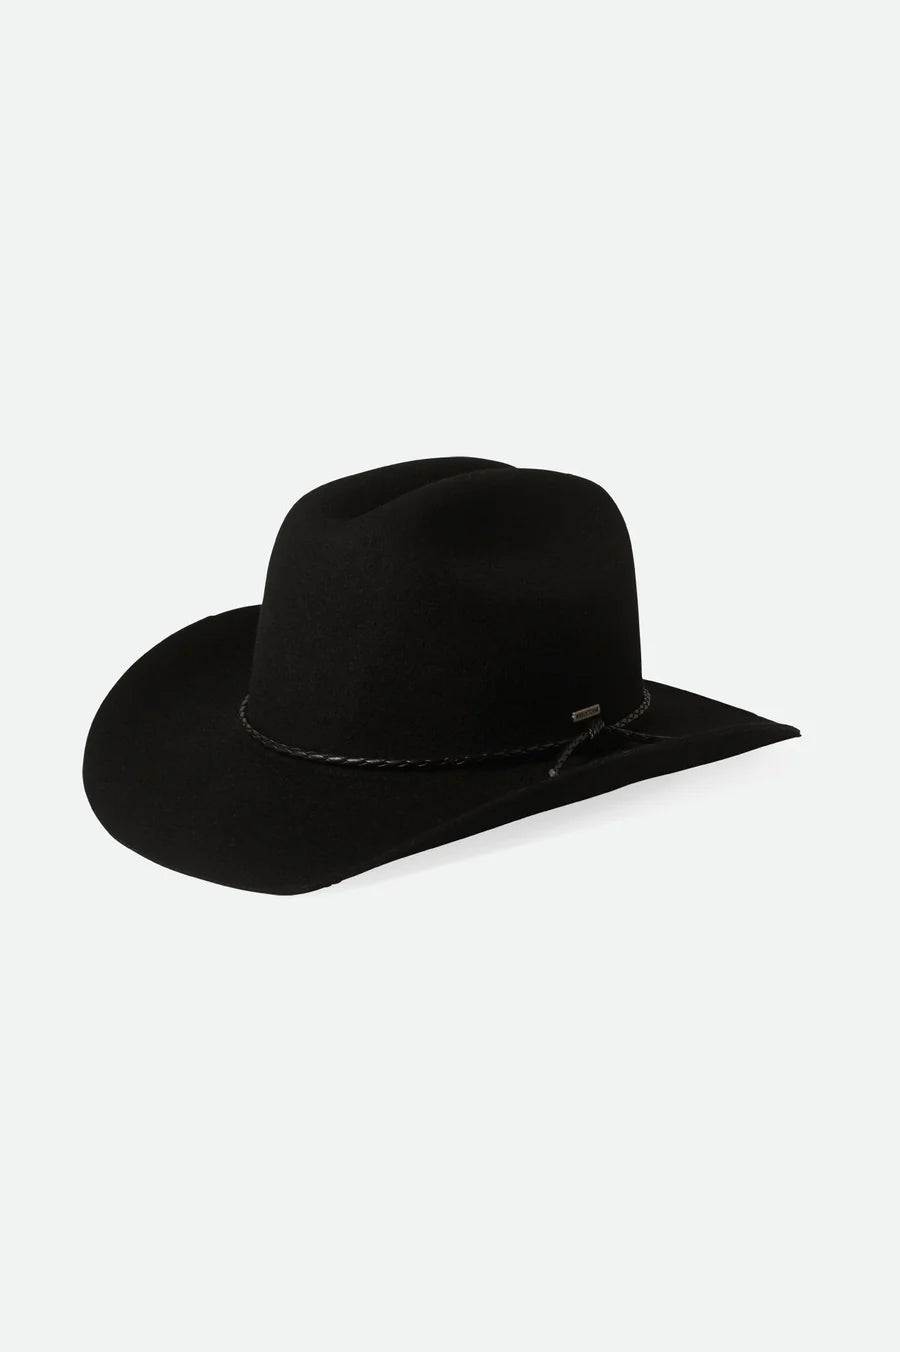 Range Cowboy Hat - Black